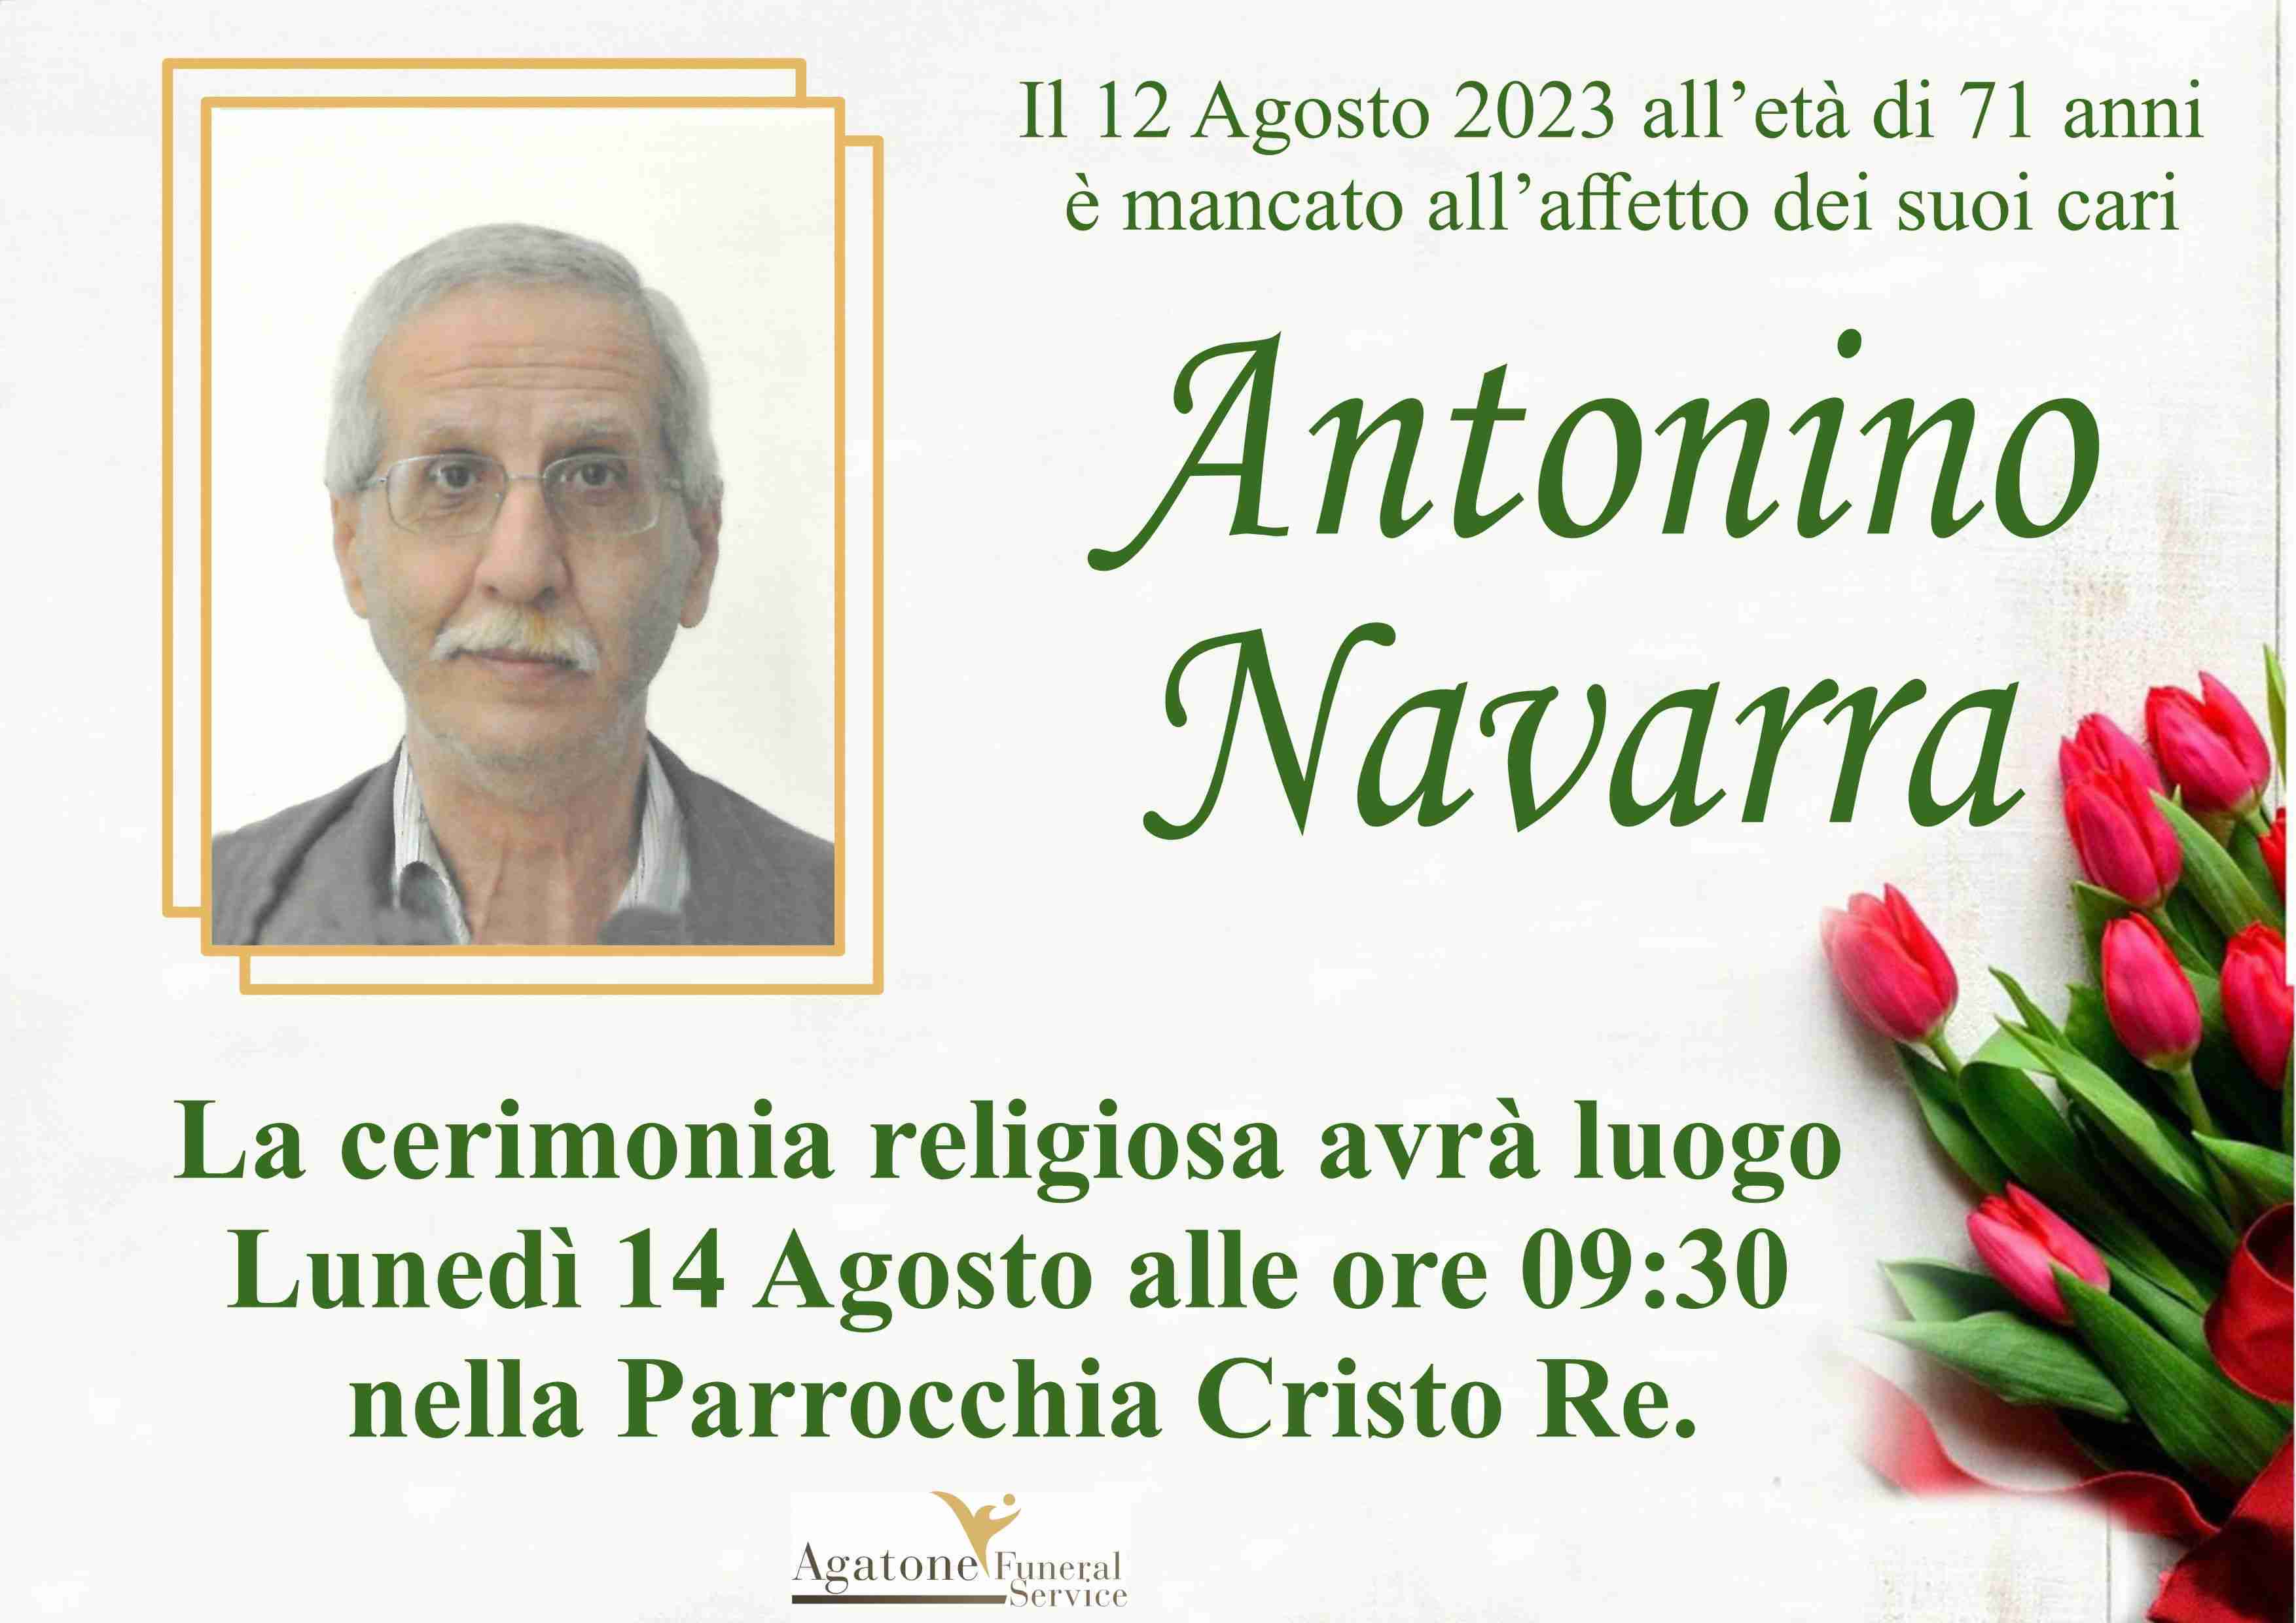 Antonino Navarra